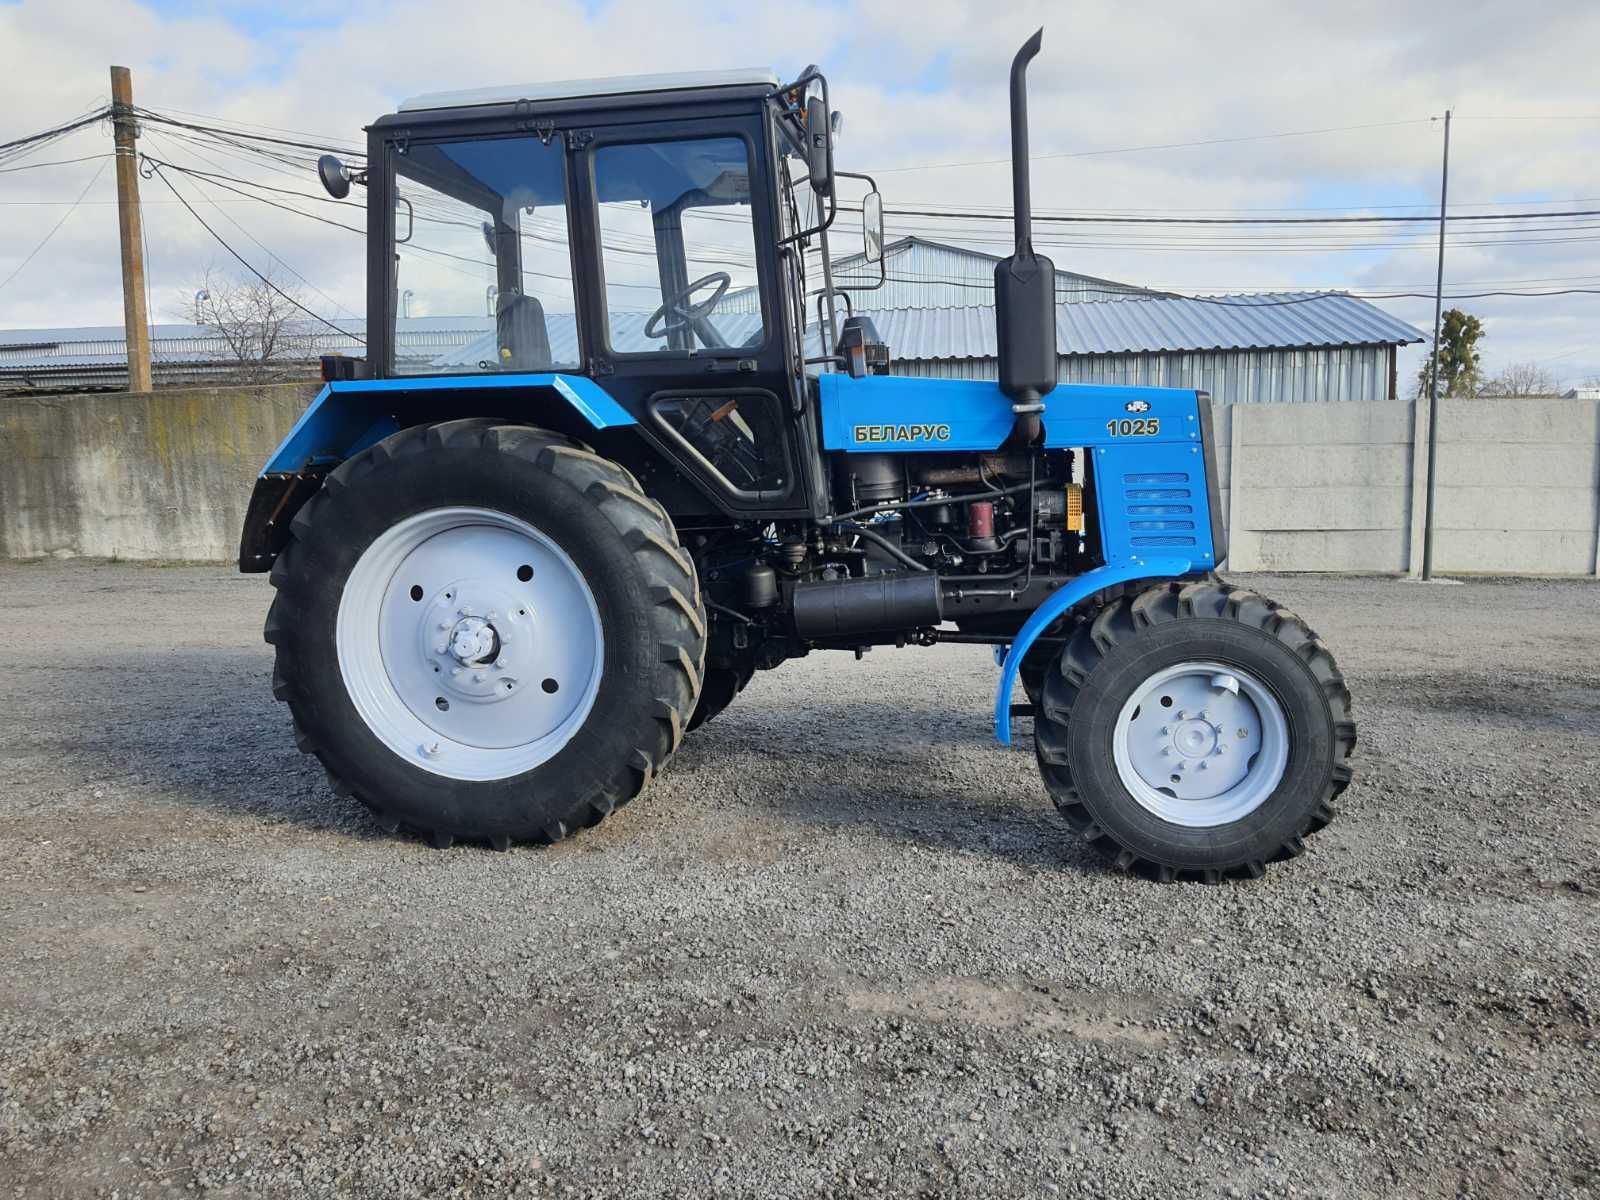 Продам трактор 1025, МТЗ 1025, Беларус-1025, 2008р.